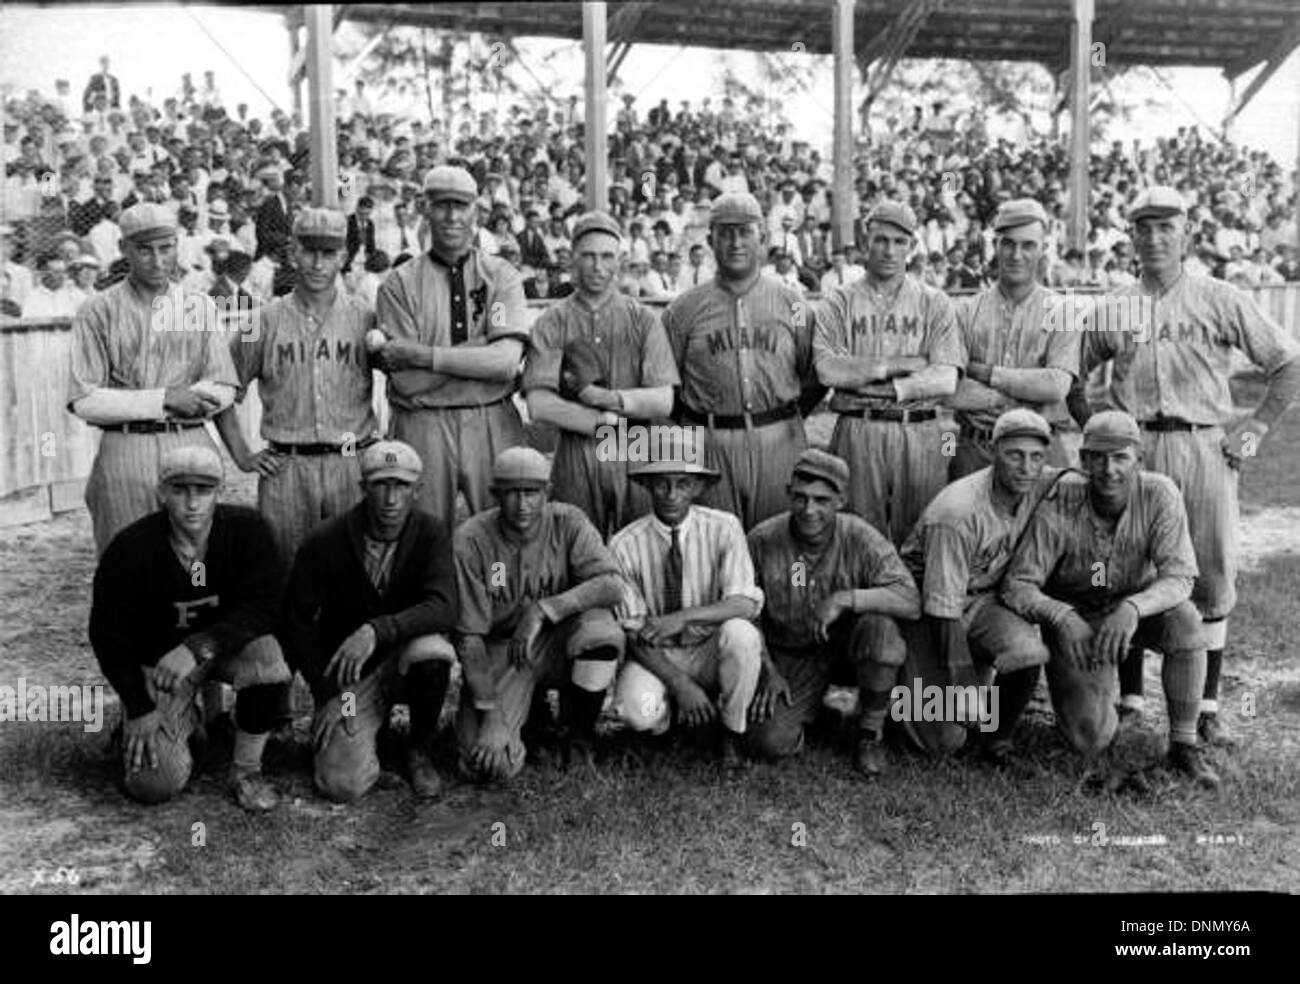 Group portrait of a Miami baseball team Stock Photo